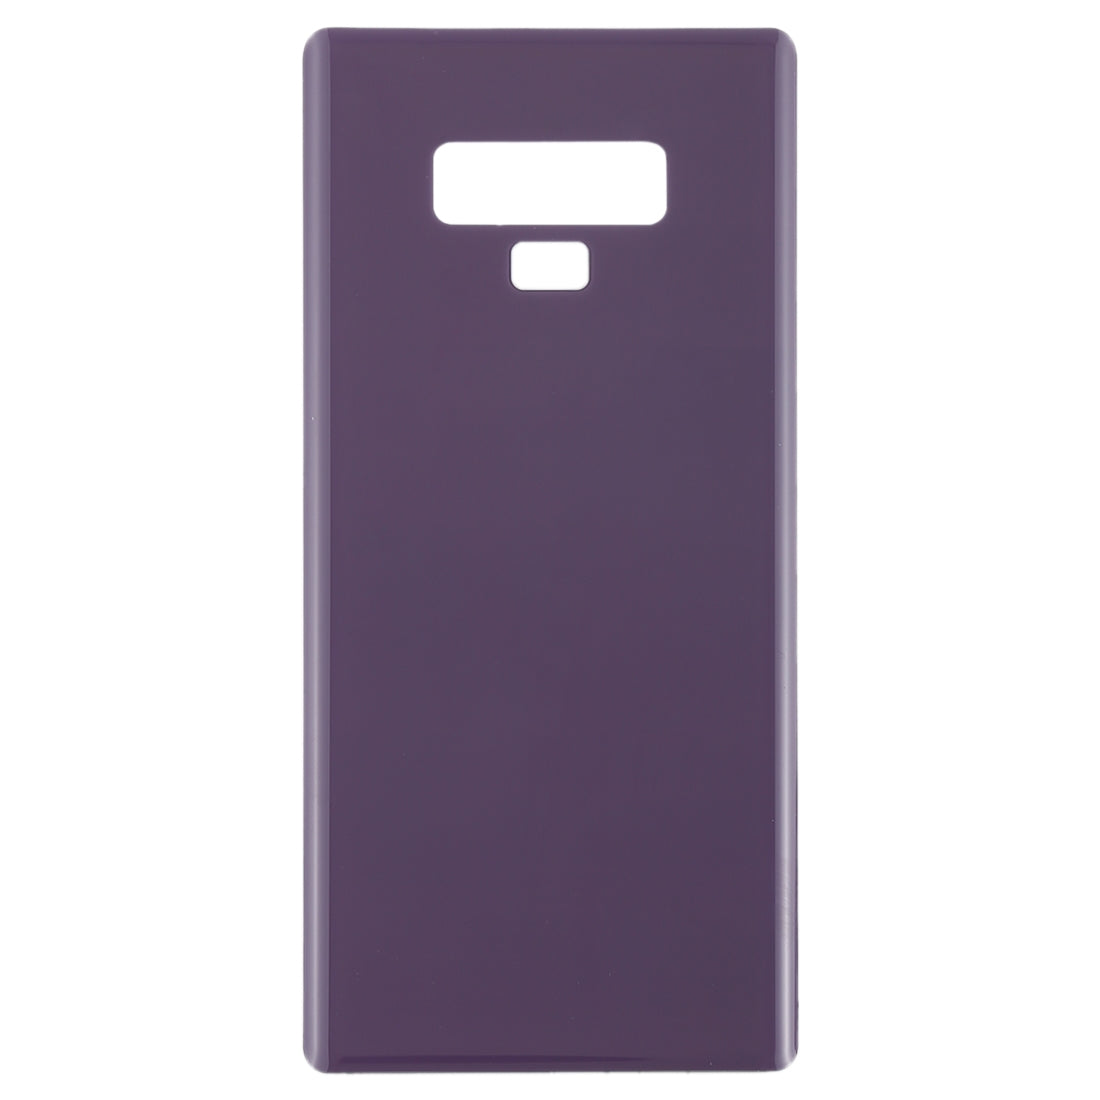 Cache Batterie Coque Arrière Samsung Galaxy Note 9 / N960A / N960F Violet